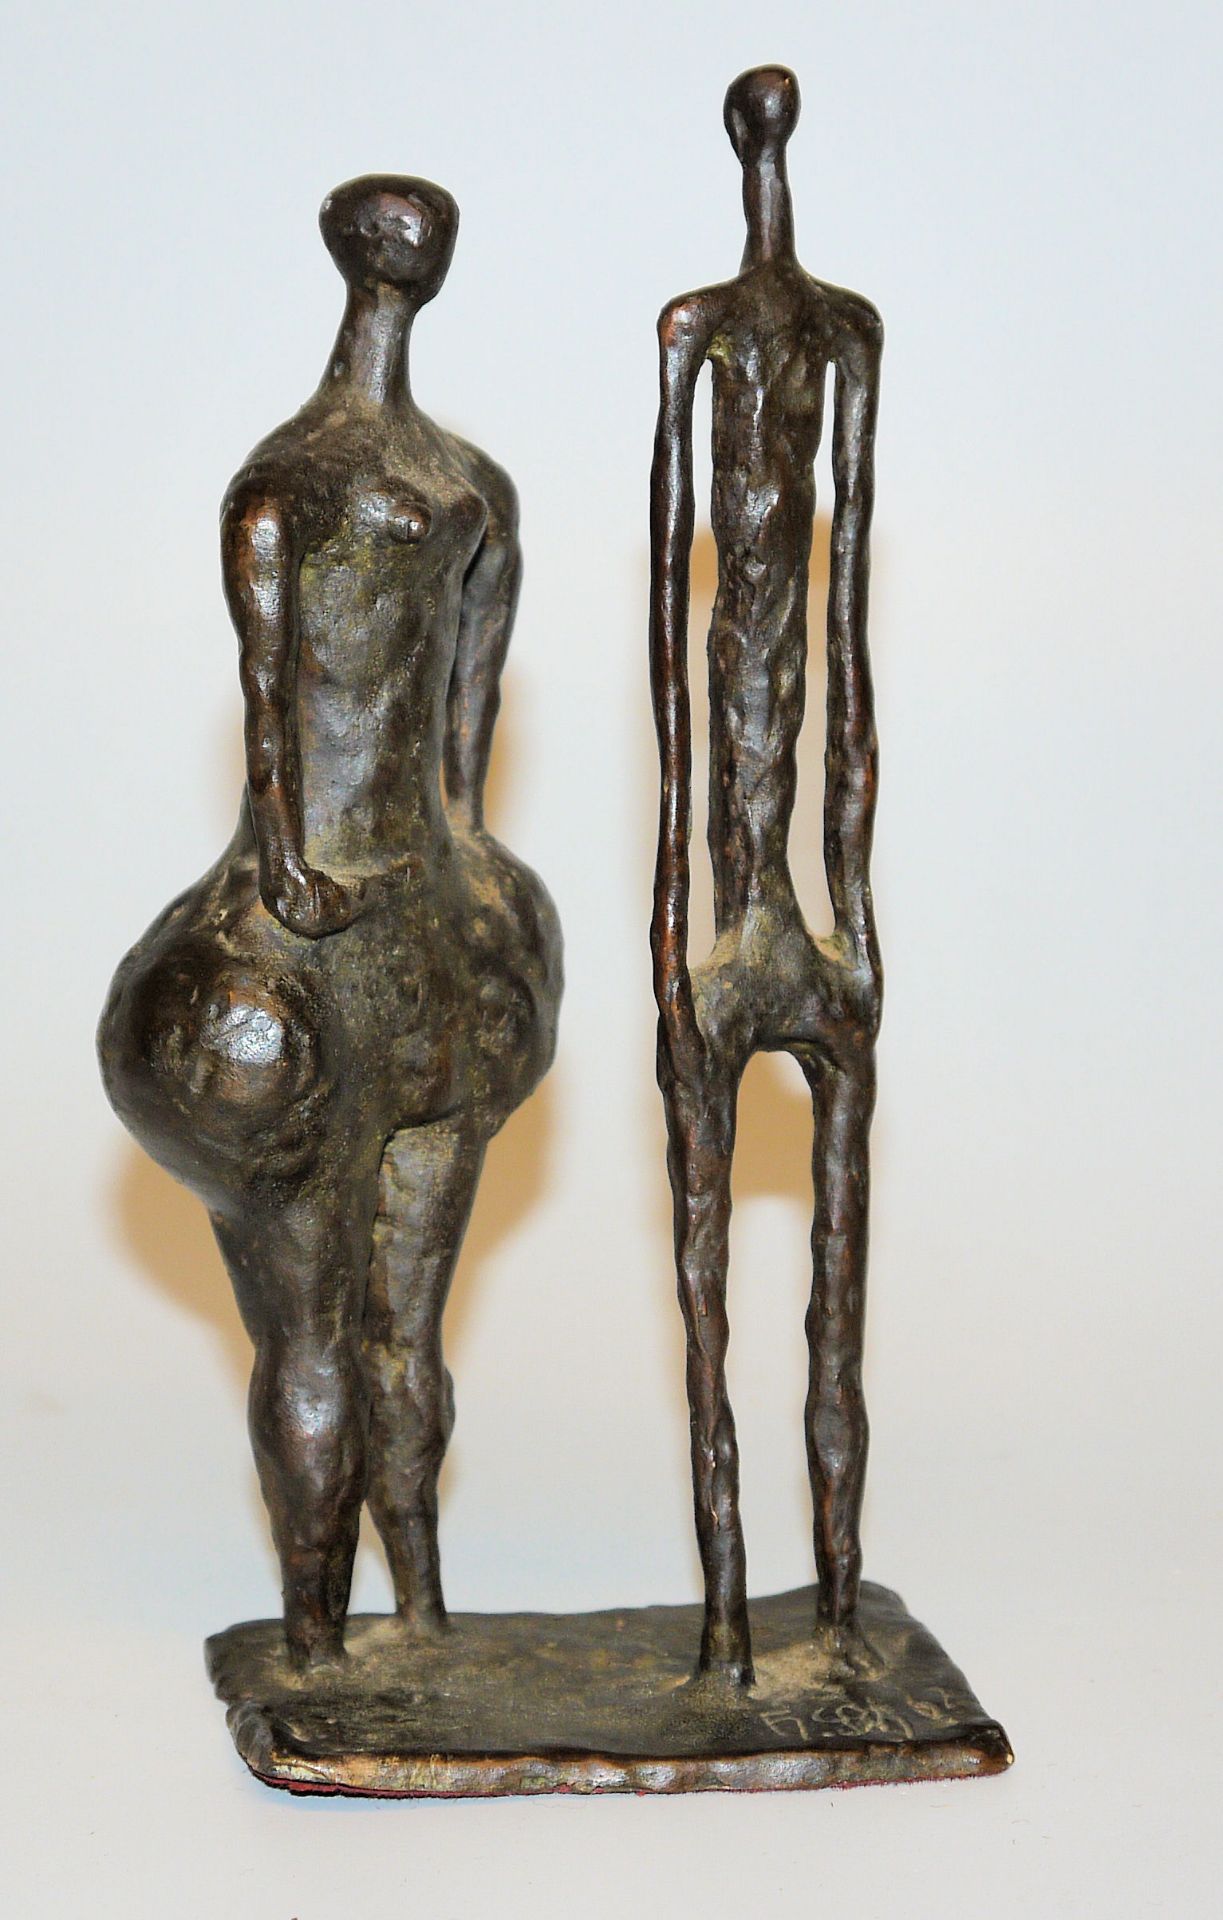 Horst Schöneich, Voluptuous Woman and Thin Man, bronze sculpture from 1962 - Image 2 of 4